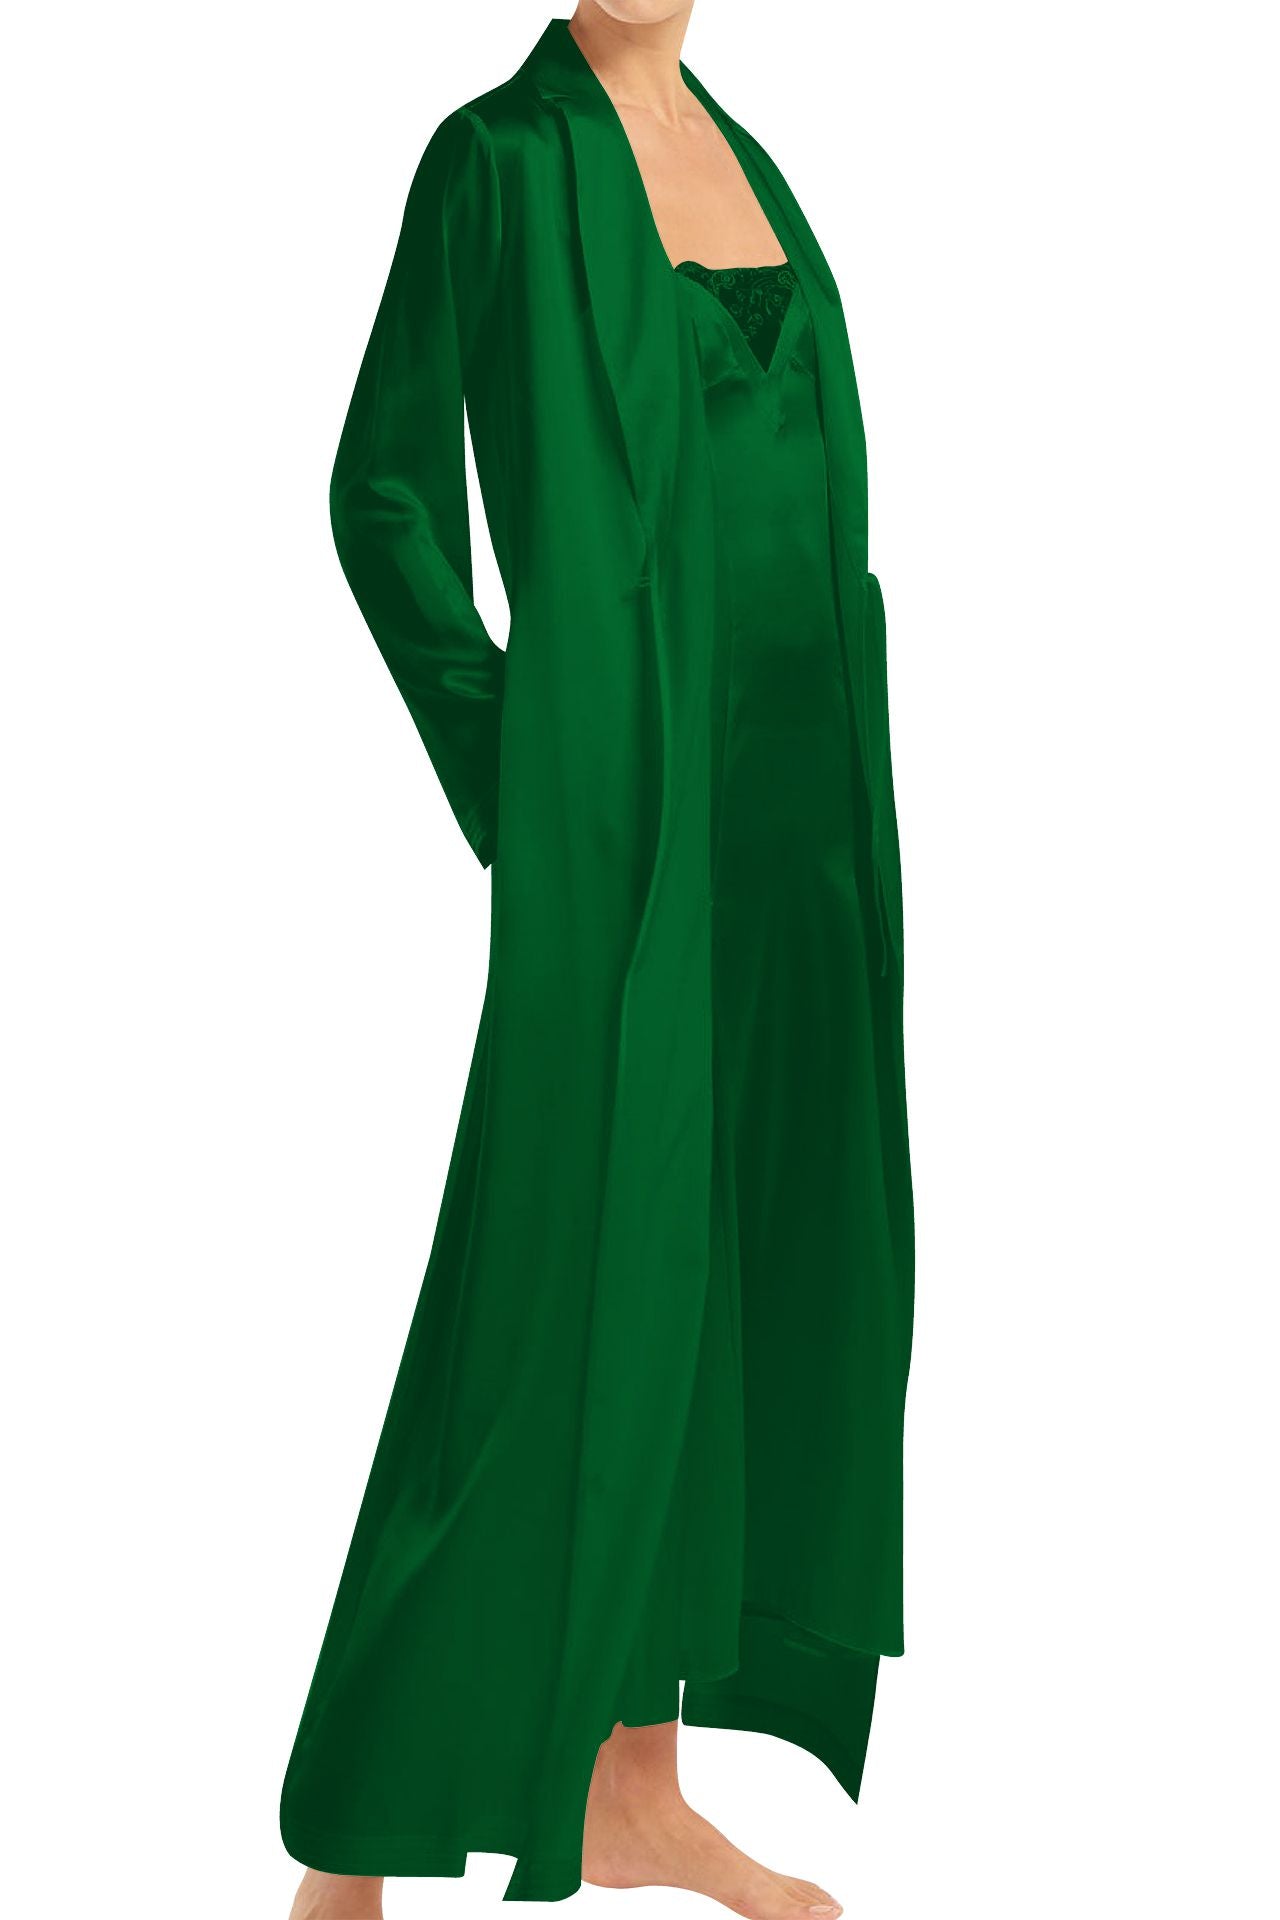 "Kyle X Shahida" "emerald green wrap dress" "long sleeve wrap dress" "wrap maxi dress green"